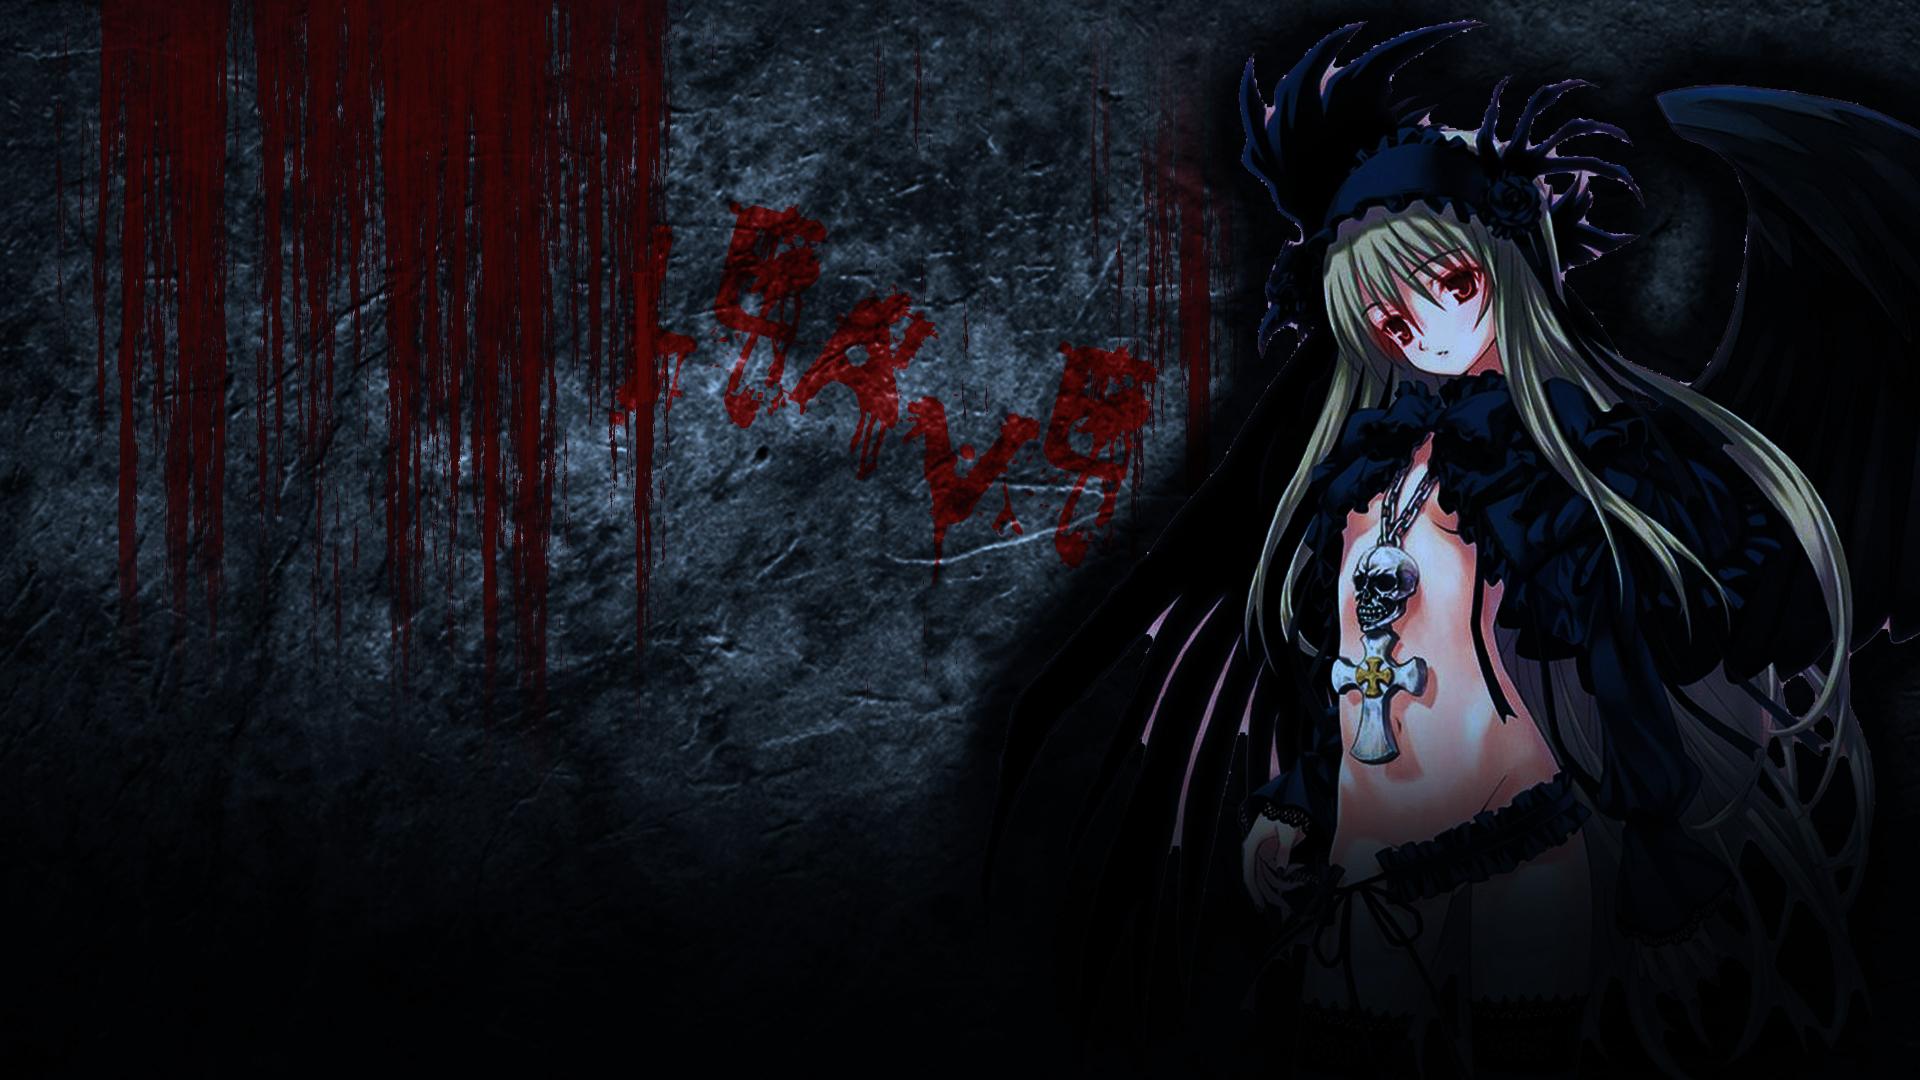 Dark Anime Wallpaper Hd 68232 Hd Wallpaper Backgrounds Download